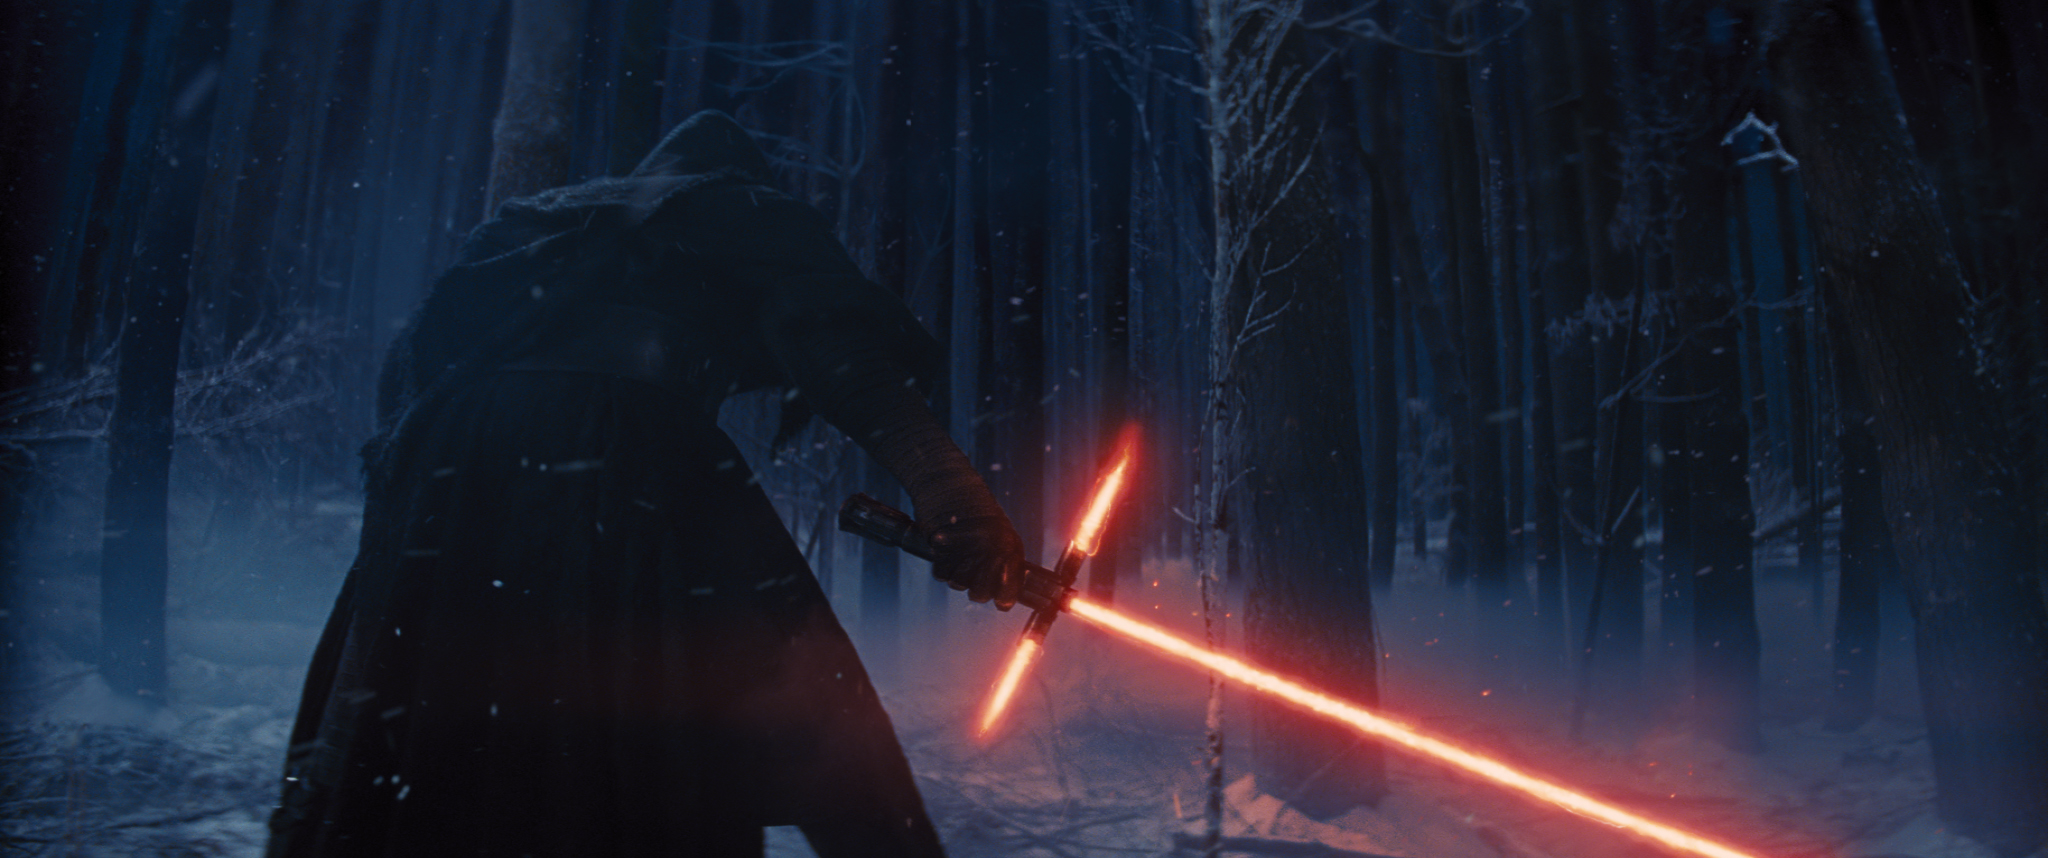 Images Of Star Wars: The Force Awakens Villain Kylo Ren Leak Online